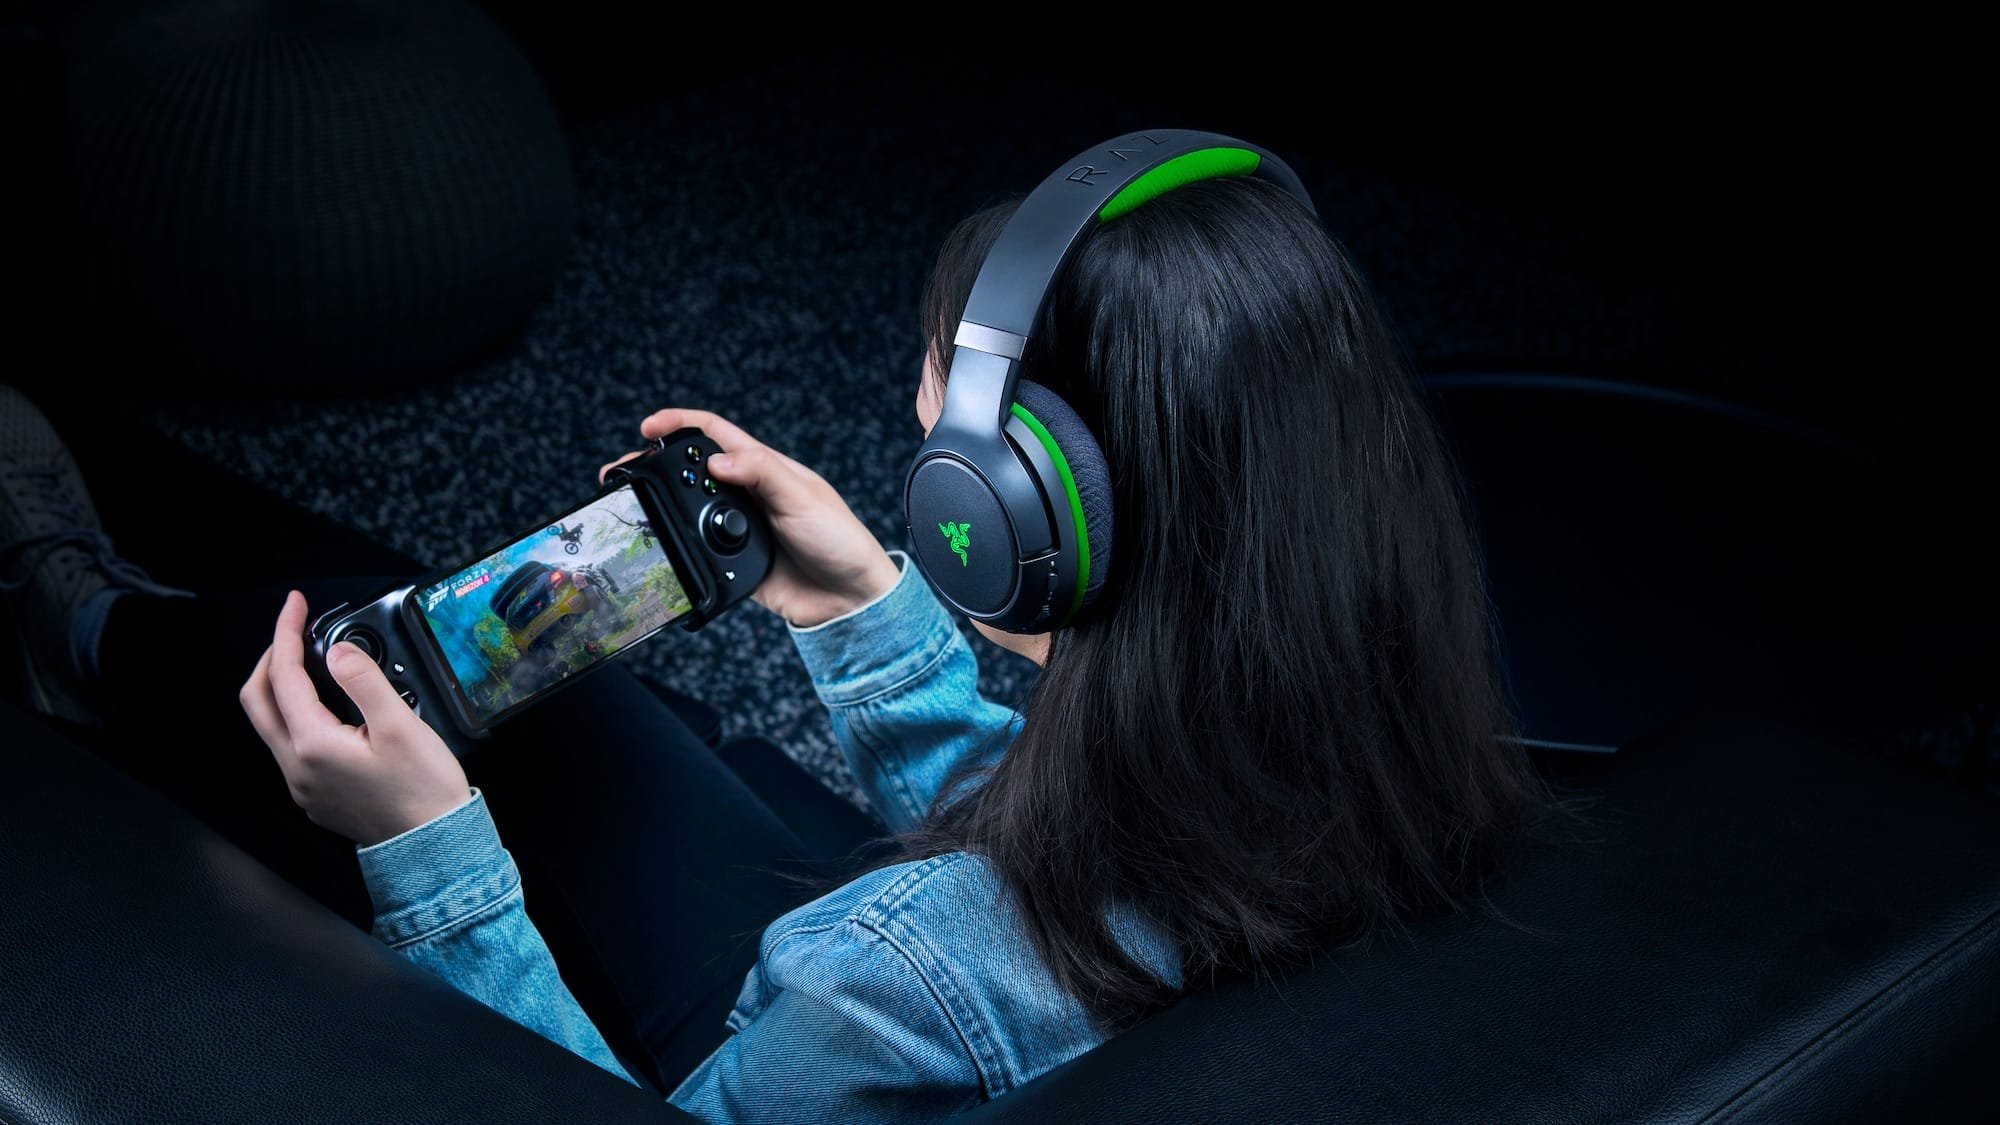 Razer Kaira Pro Xbox & cloud gaming headset uses next-gen audio technologies